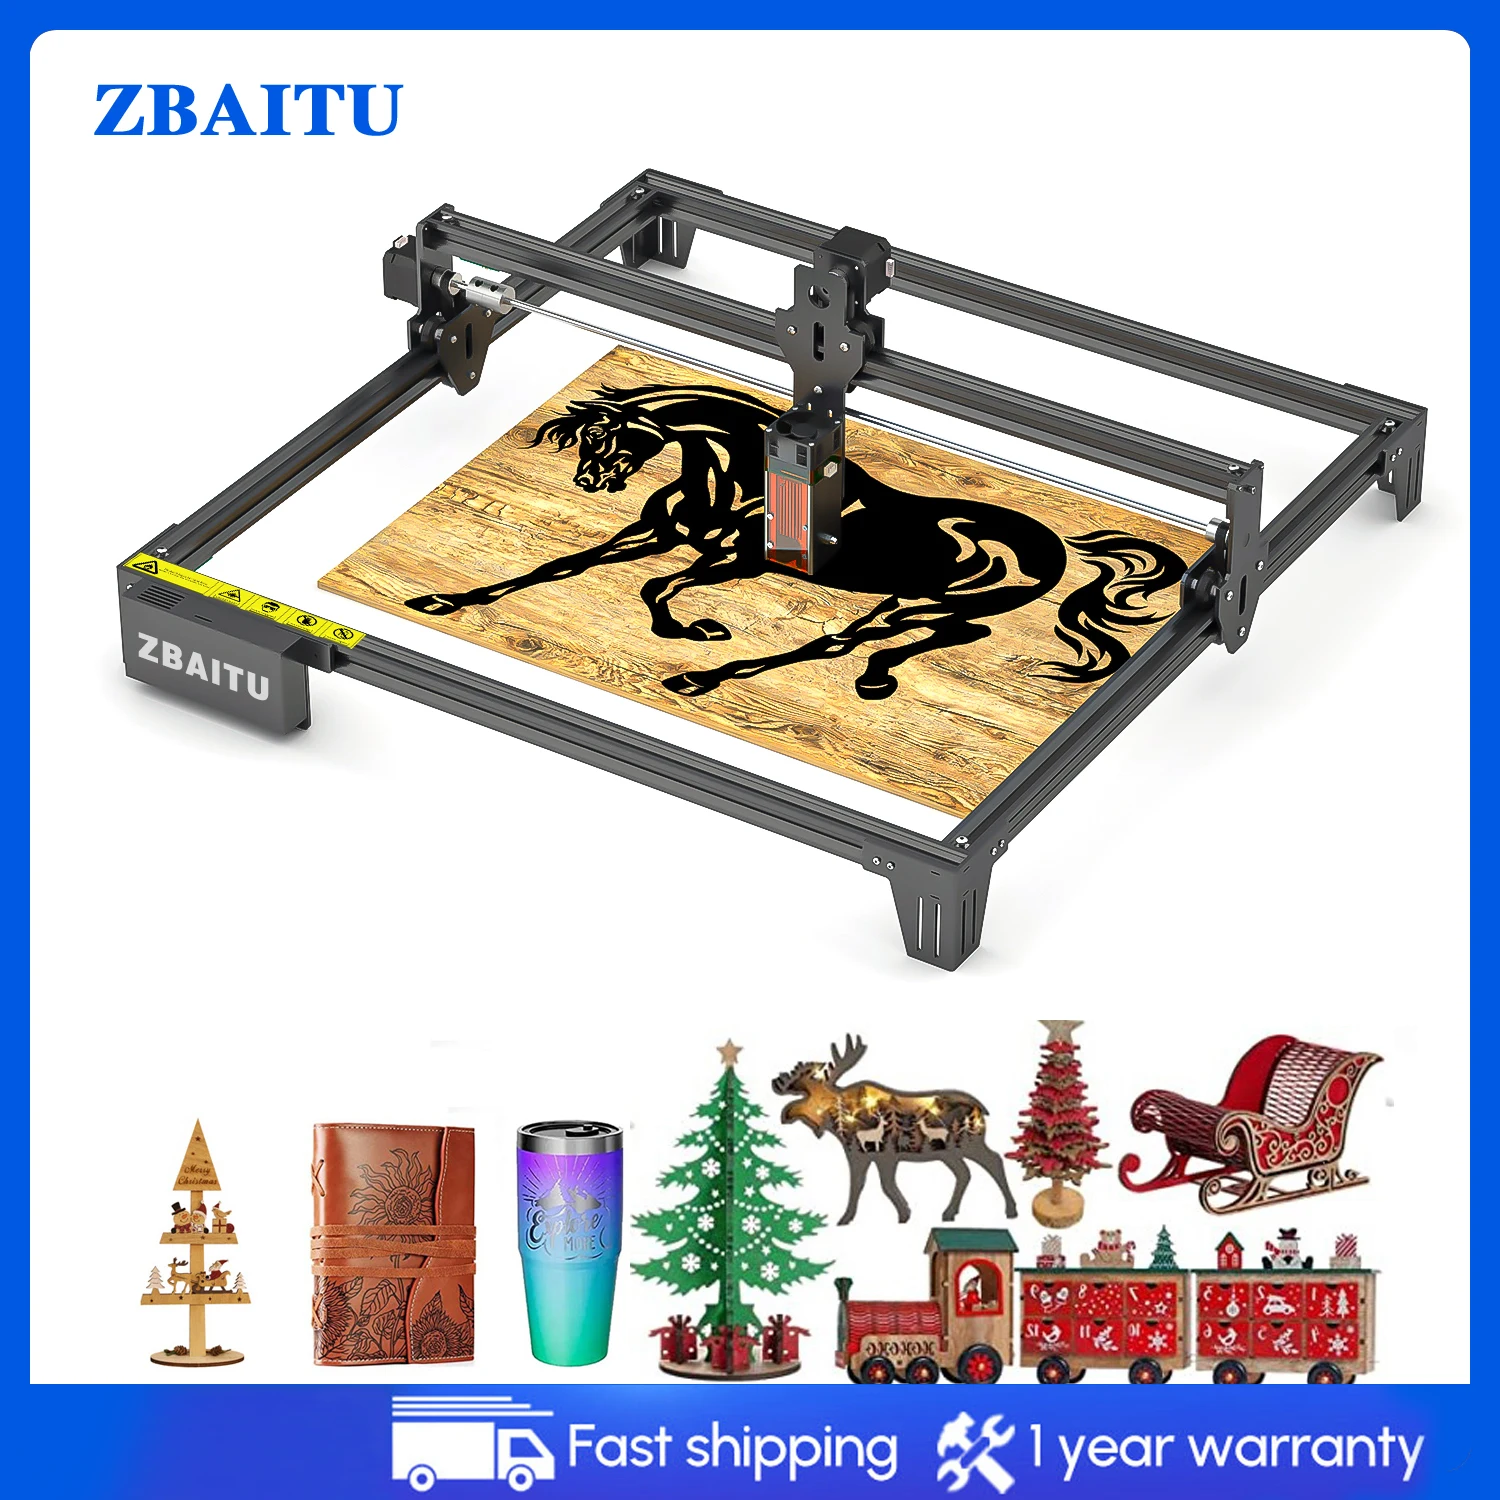 ZBAITU Laser Engraver Cutter Machine 80W CNC Engraving Wood Metal Acrylic Glass Offline Printer with Air Assist Nozzle Airflow